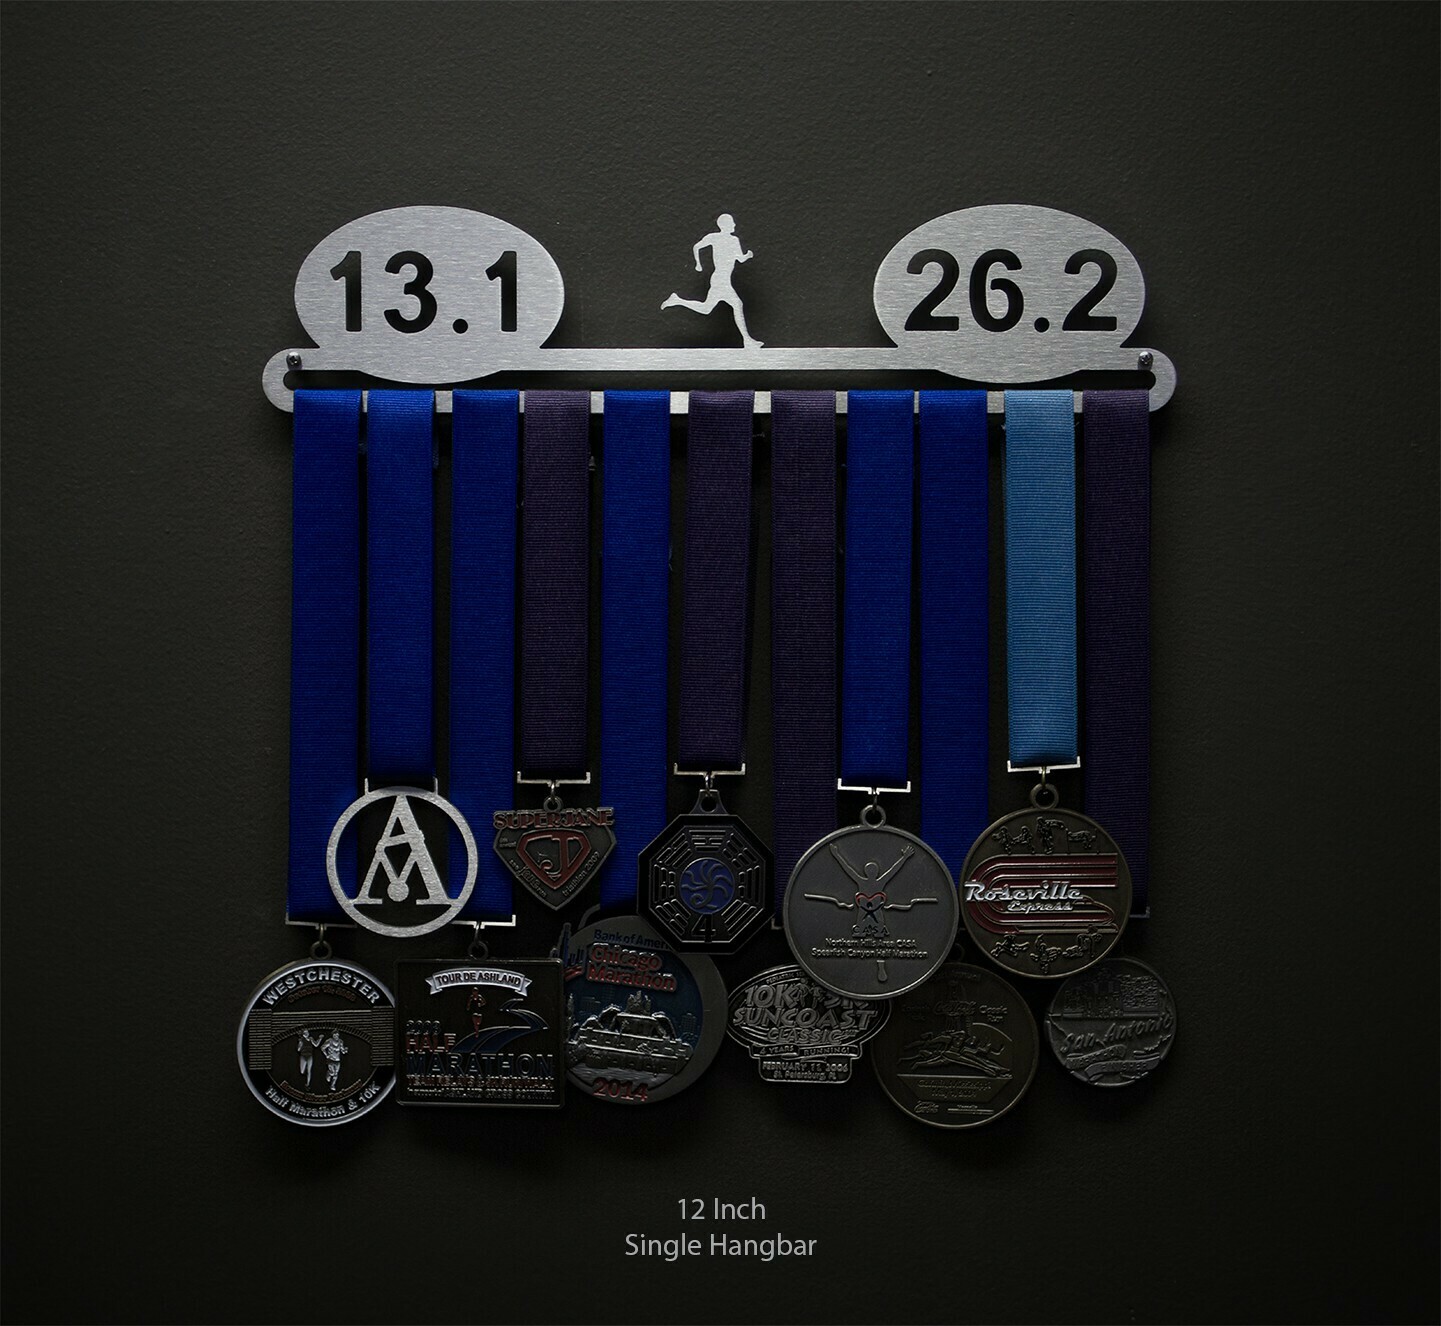 13.126.2 Male Runner Medal Display